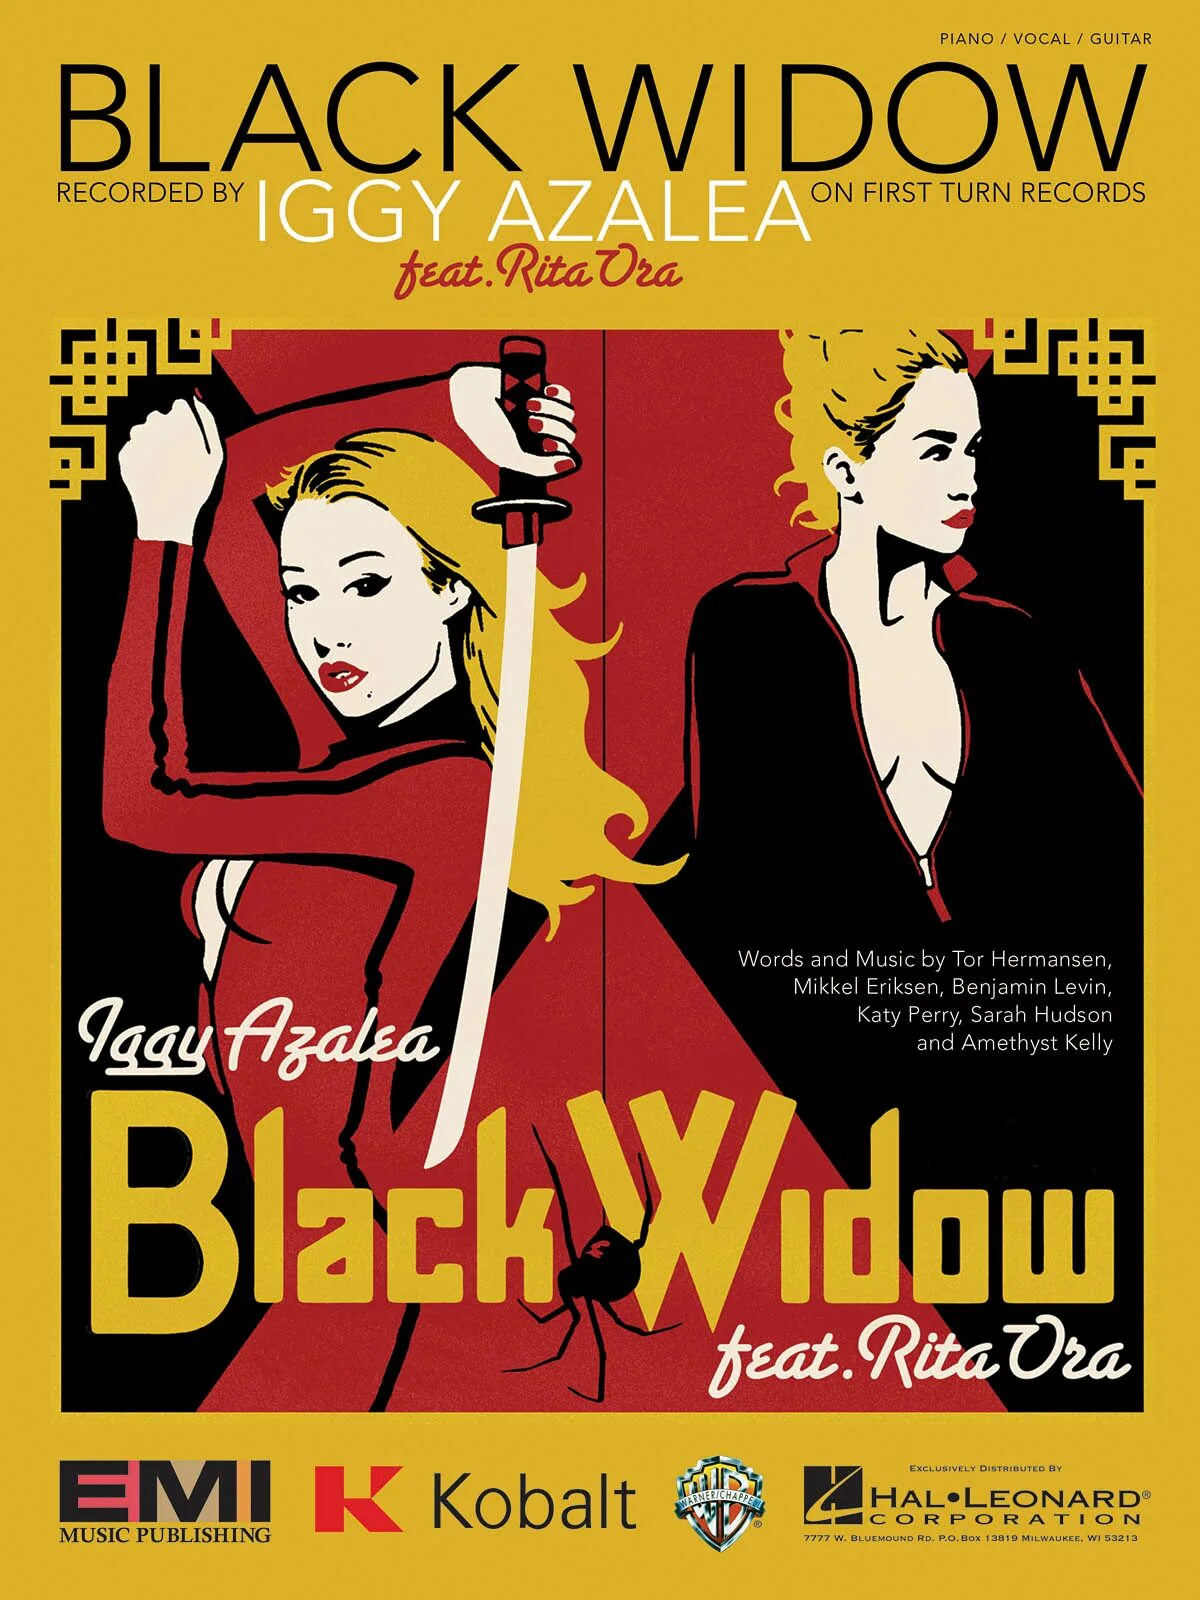 Black Widow Iggy Azalea feat.. Черная вдова афиша. Вдова музыка